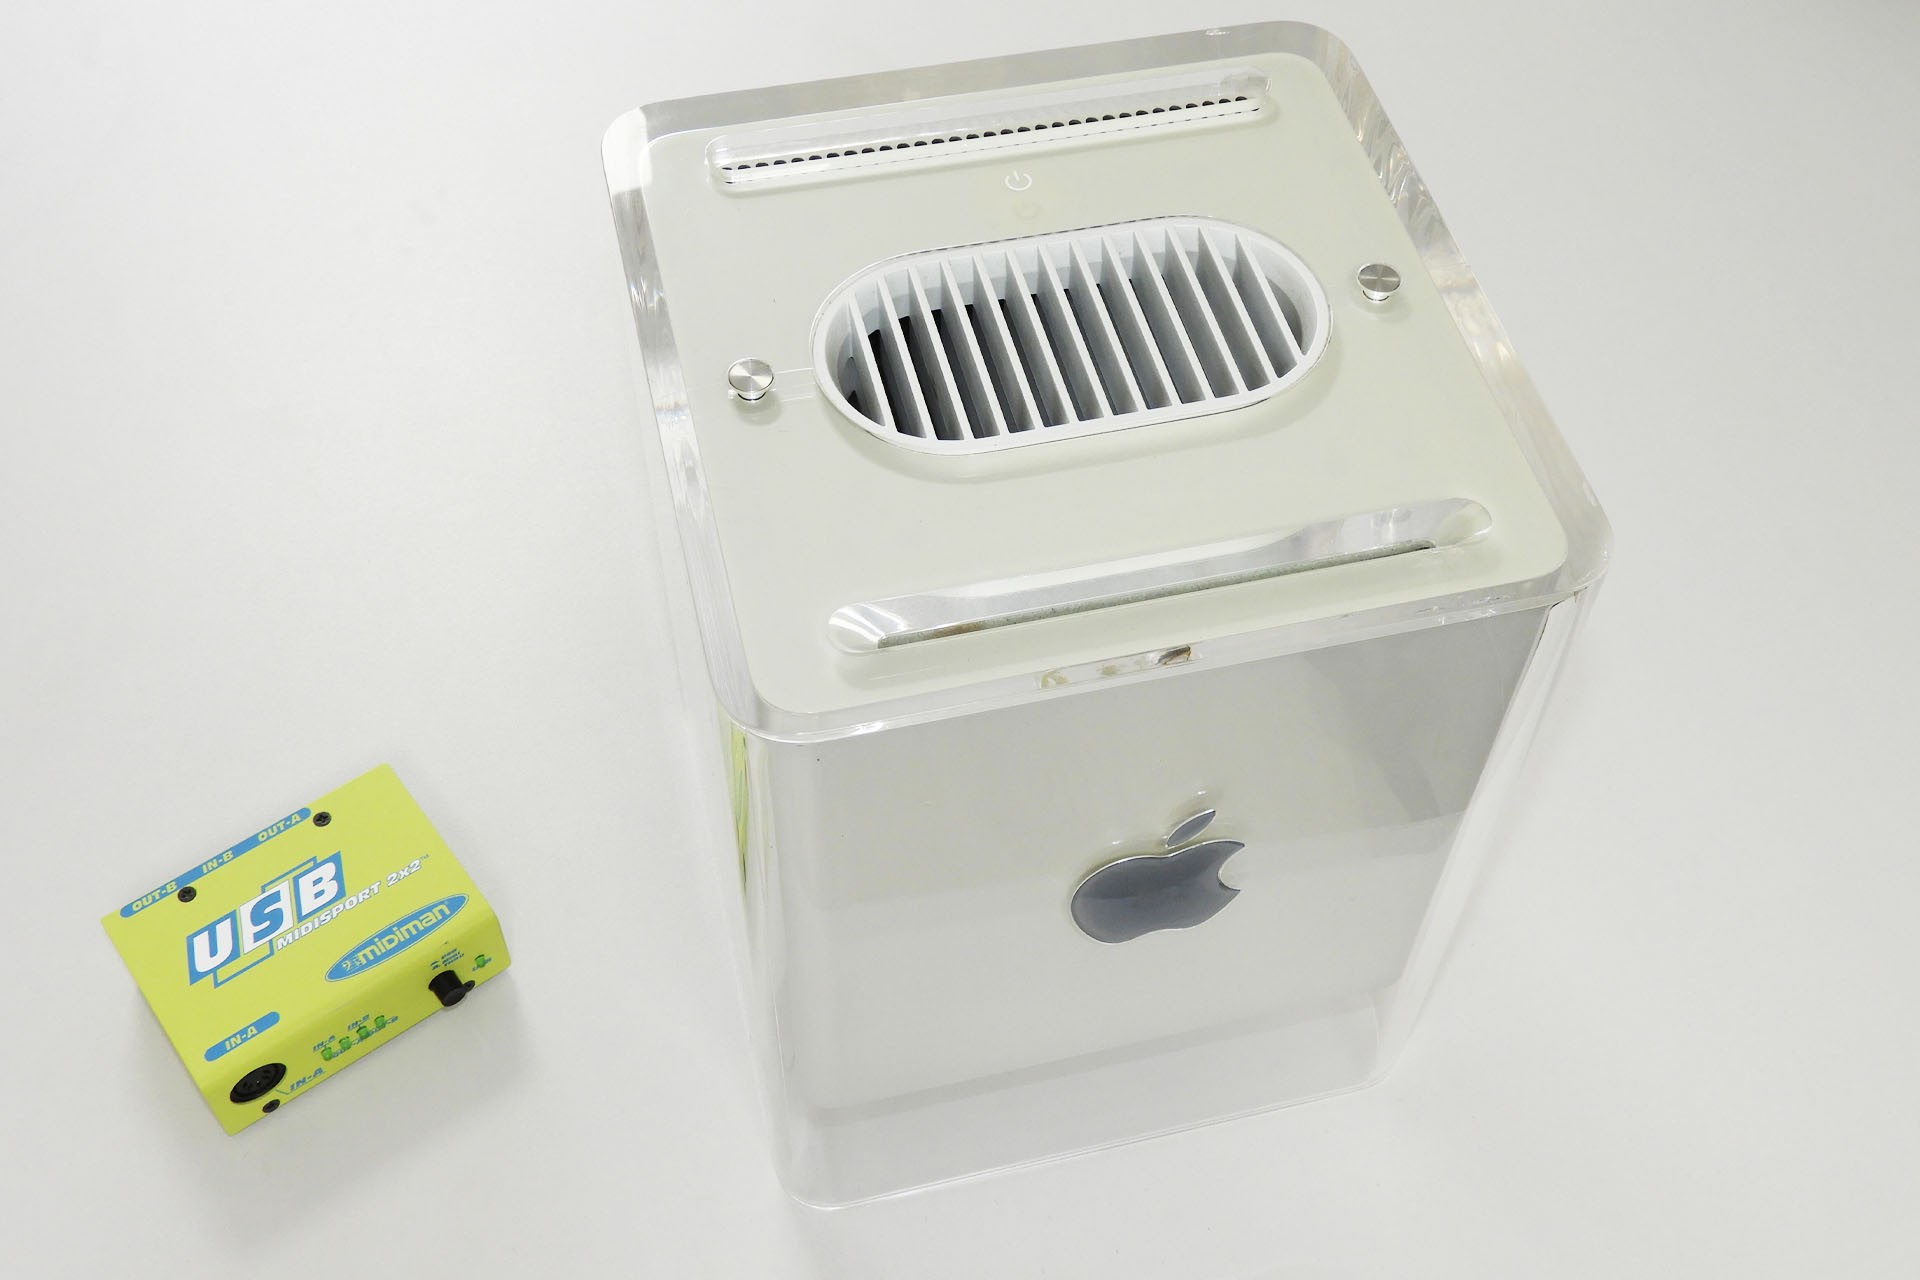 Apple G4 Cube and M-Audio MidiSport 2x2 used to program my Nord Micro Modular